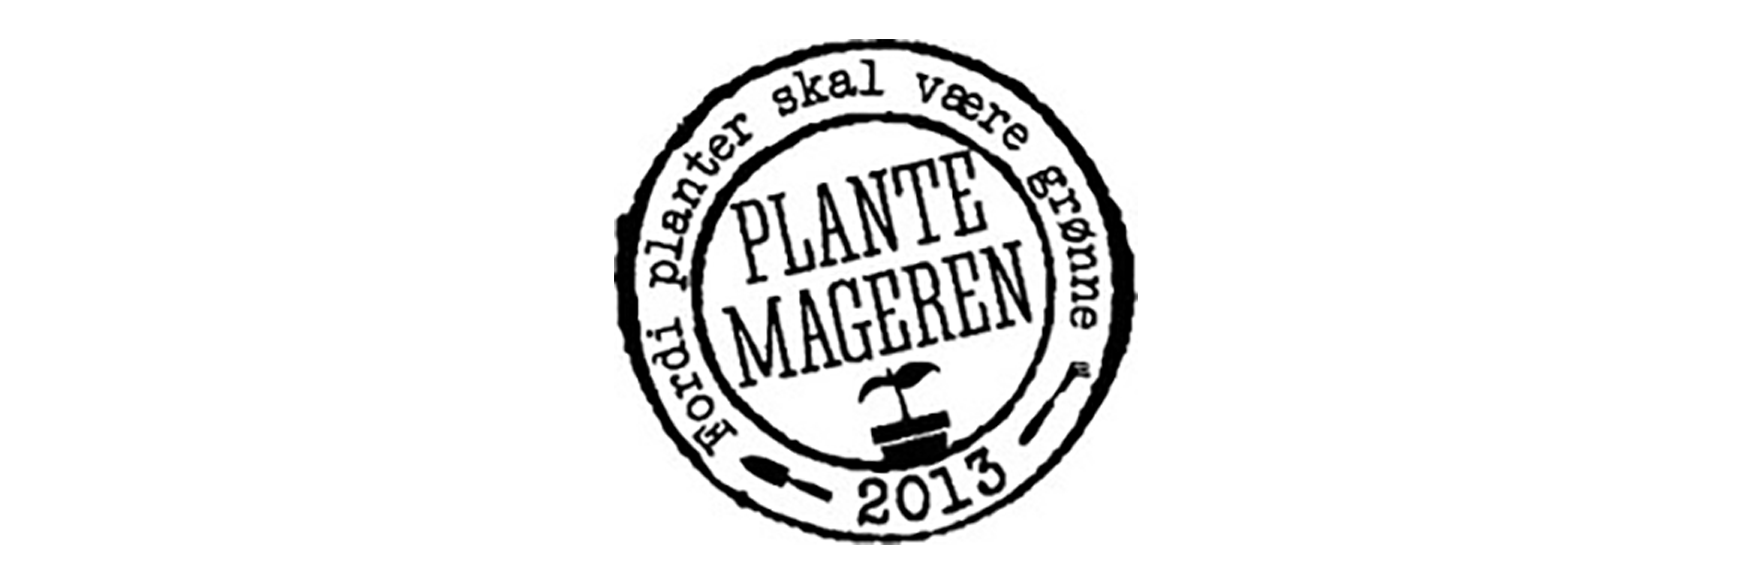 Plantemageren I/S